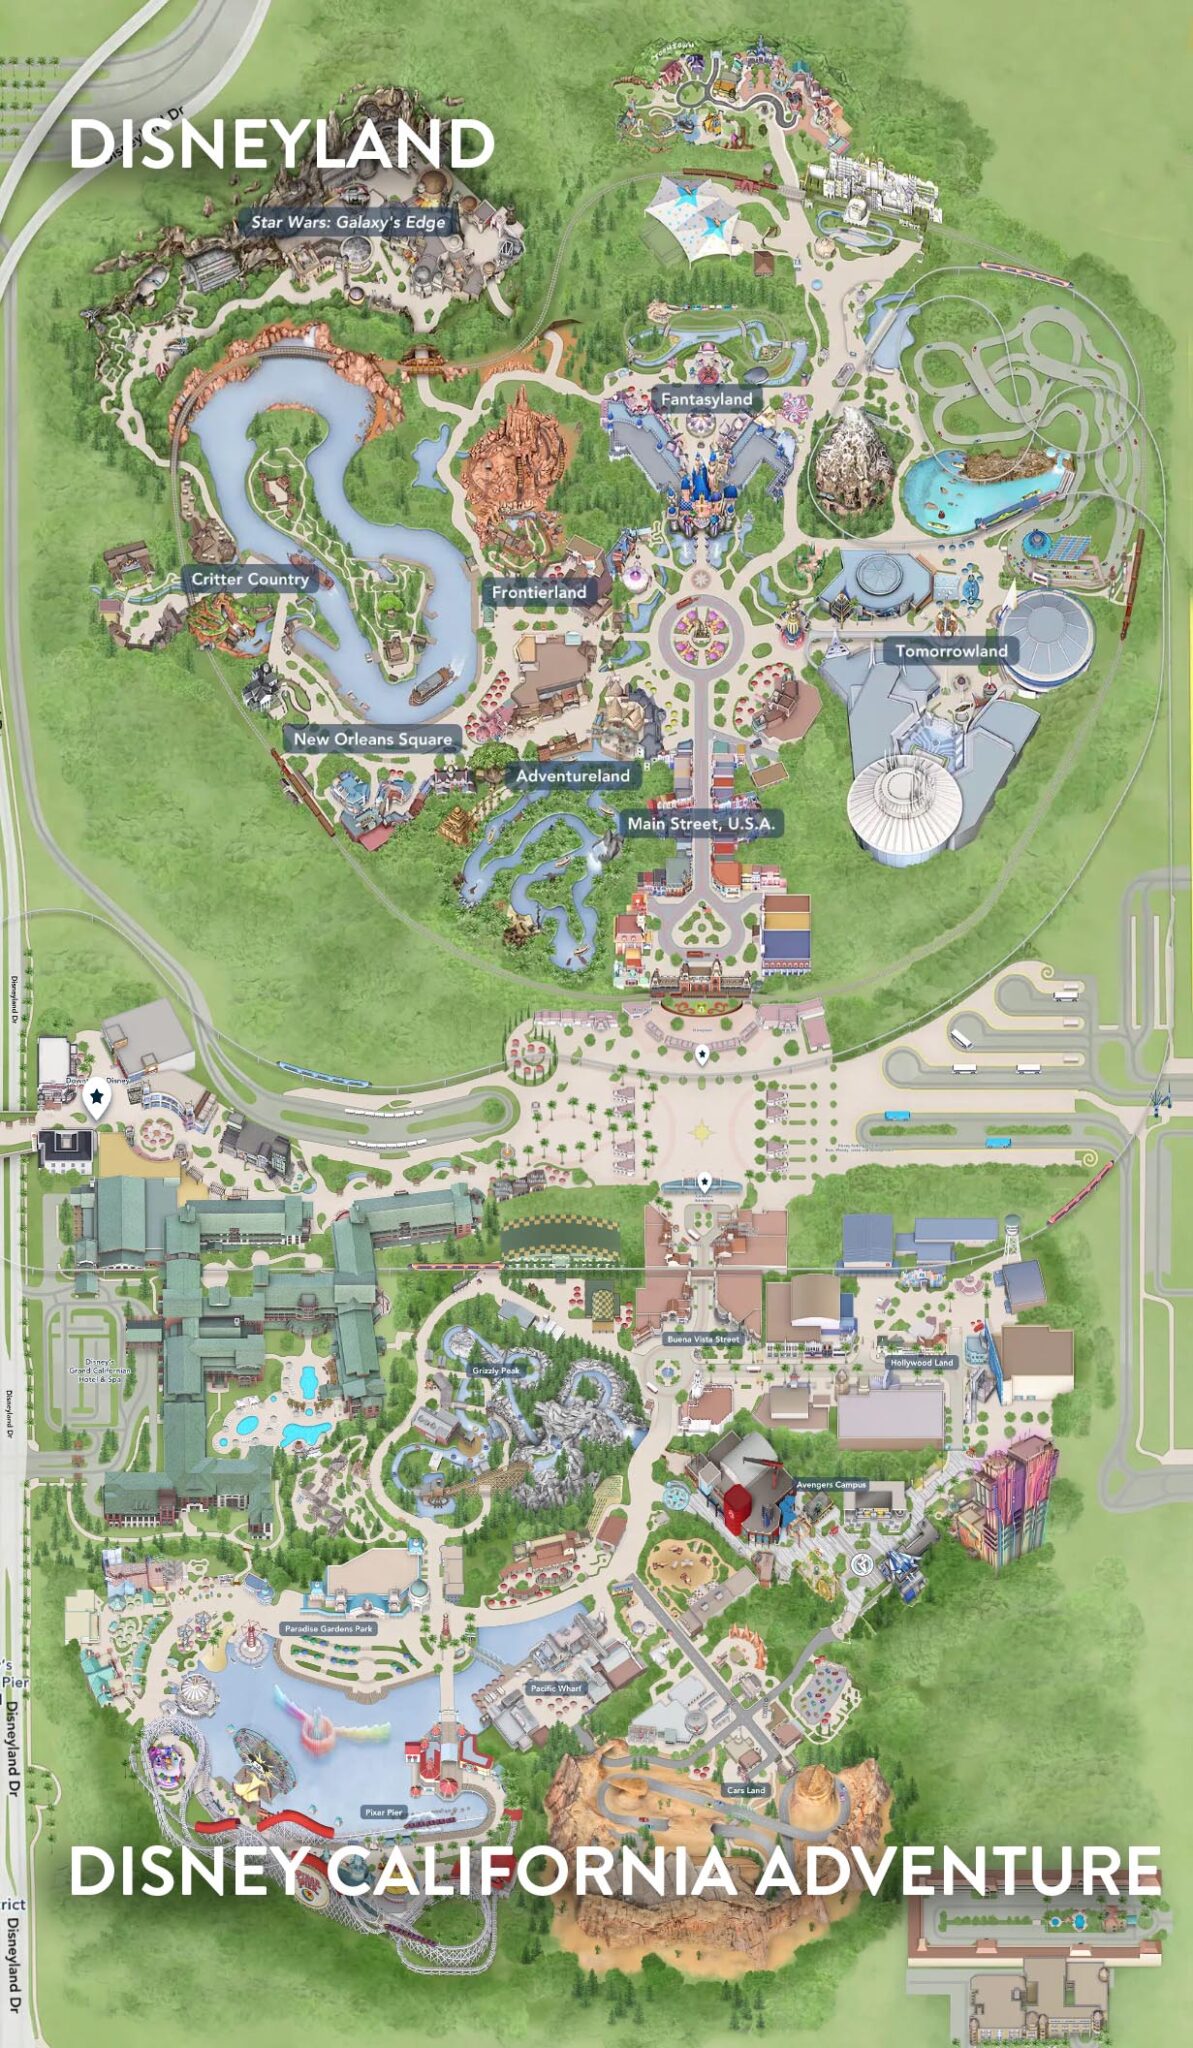 Disneyland and Disney California Adventure Theme Parks aerial map